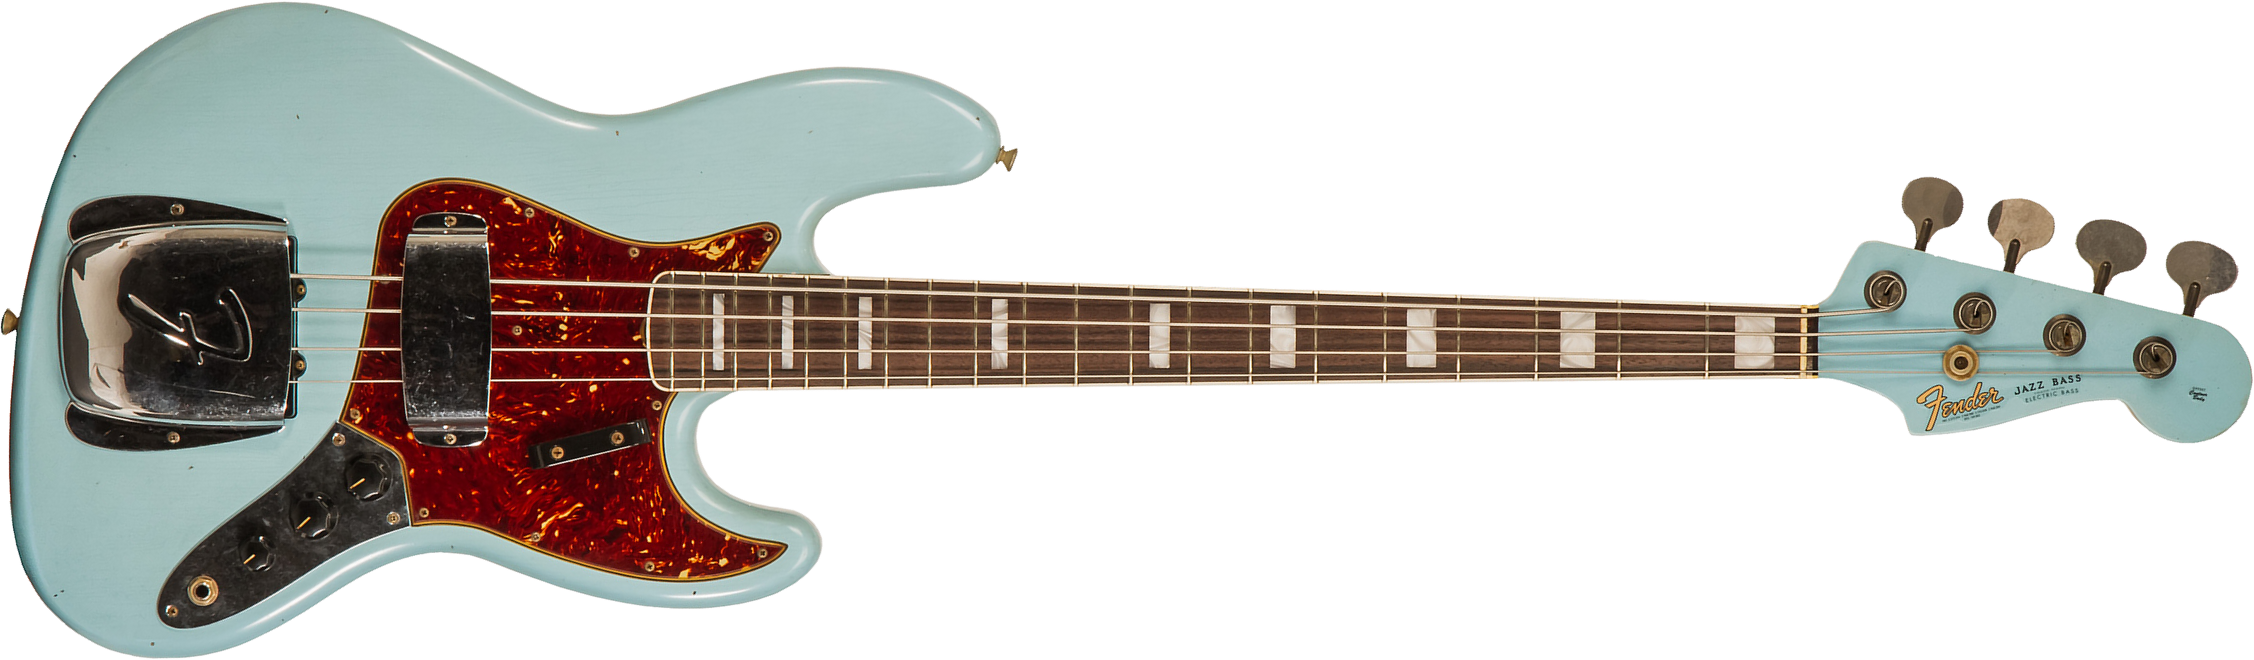 Fender Custom Shop Jazz Bass 1966 Rw #cz553892 - Journeyman Relic Daphne Blue - Solid body electric bass - Main picture